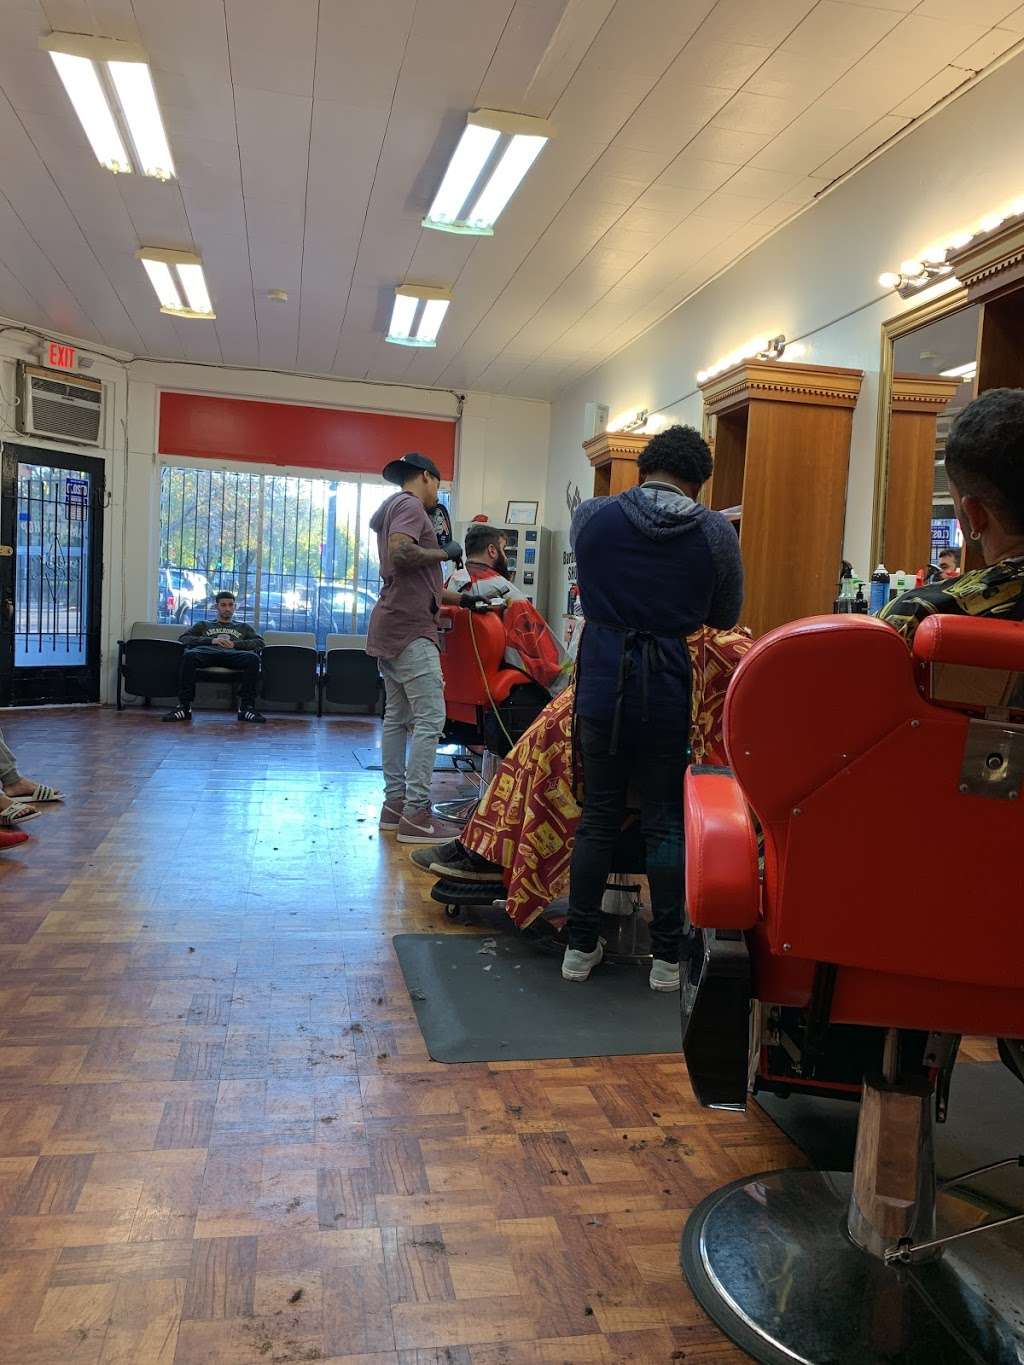 Argelys Barber shop - hair care  | Photo 1 of 10 | Address: 1271 Alcott St, Philadelphia, PA 19149, USA | Phone: (215) 278-3236